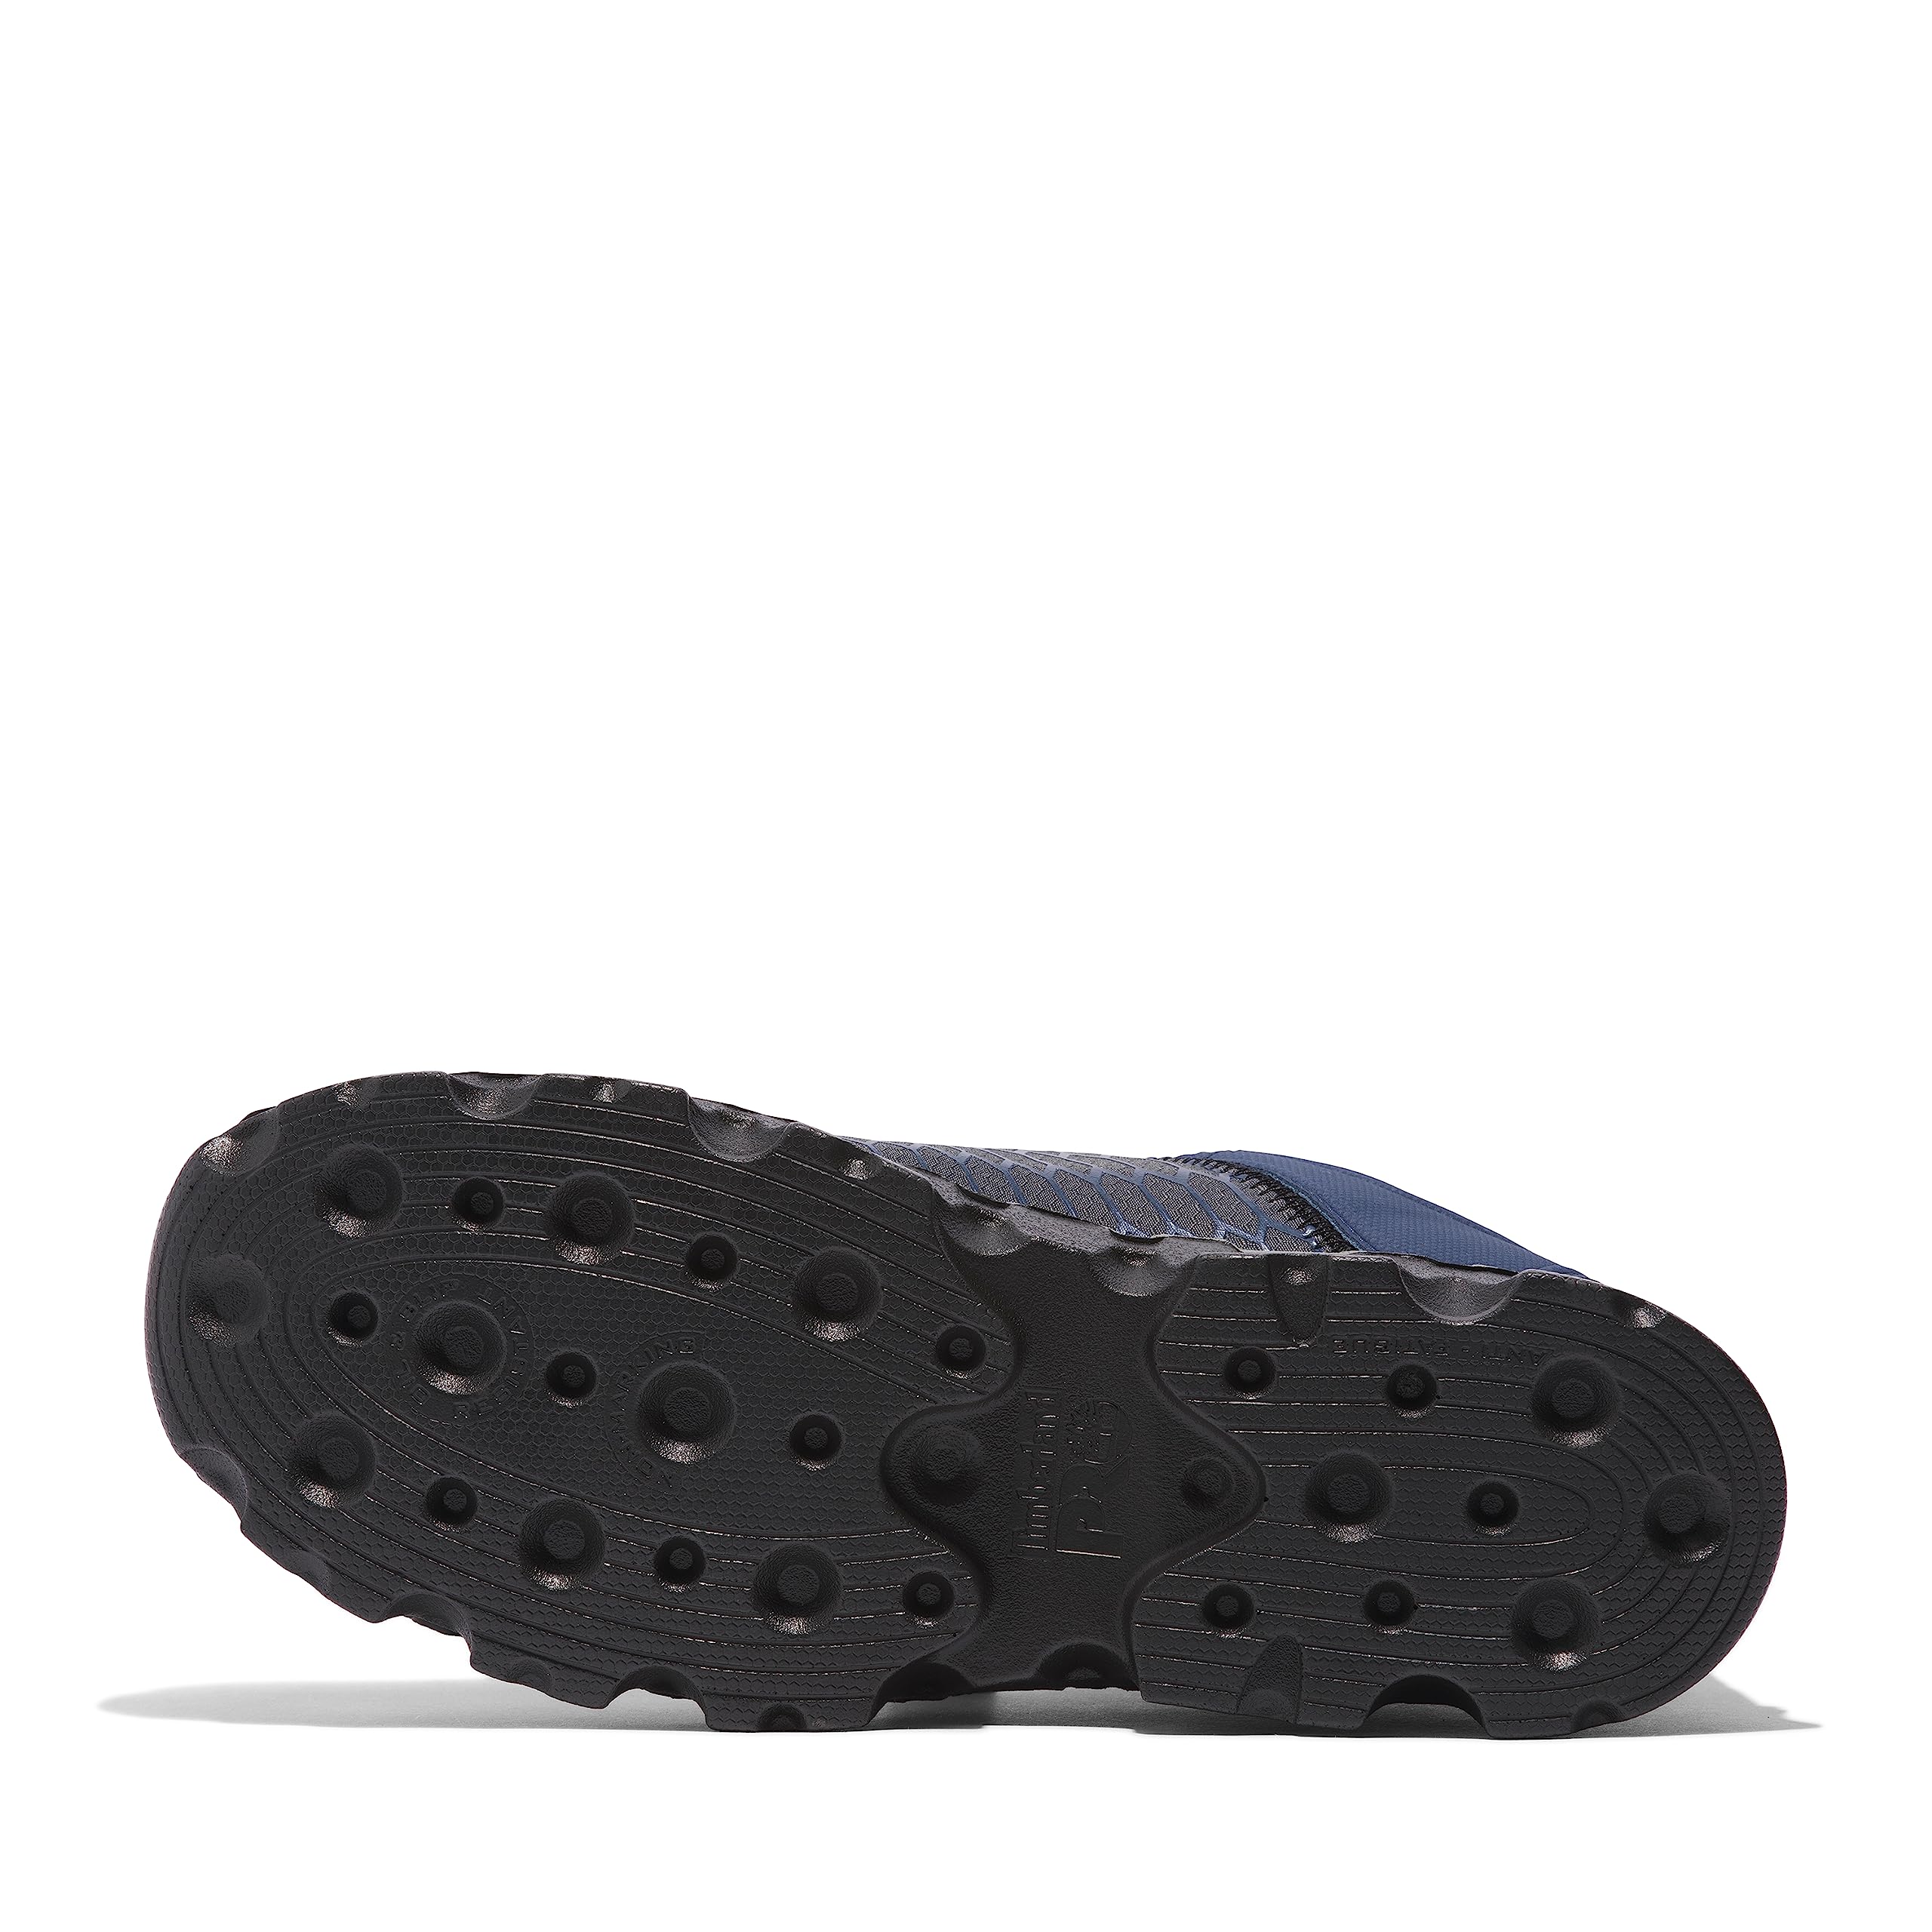 Timberland PRO Men's Powertrain Sport Alloy Toe Eh-Raptek Synthetic Industrial & Construction Shoe